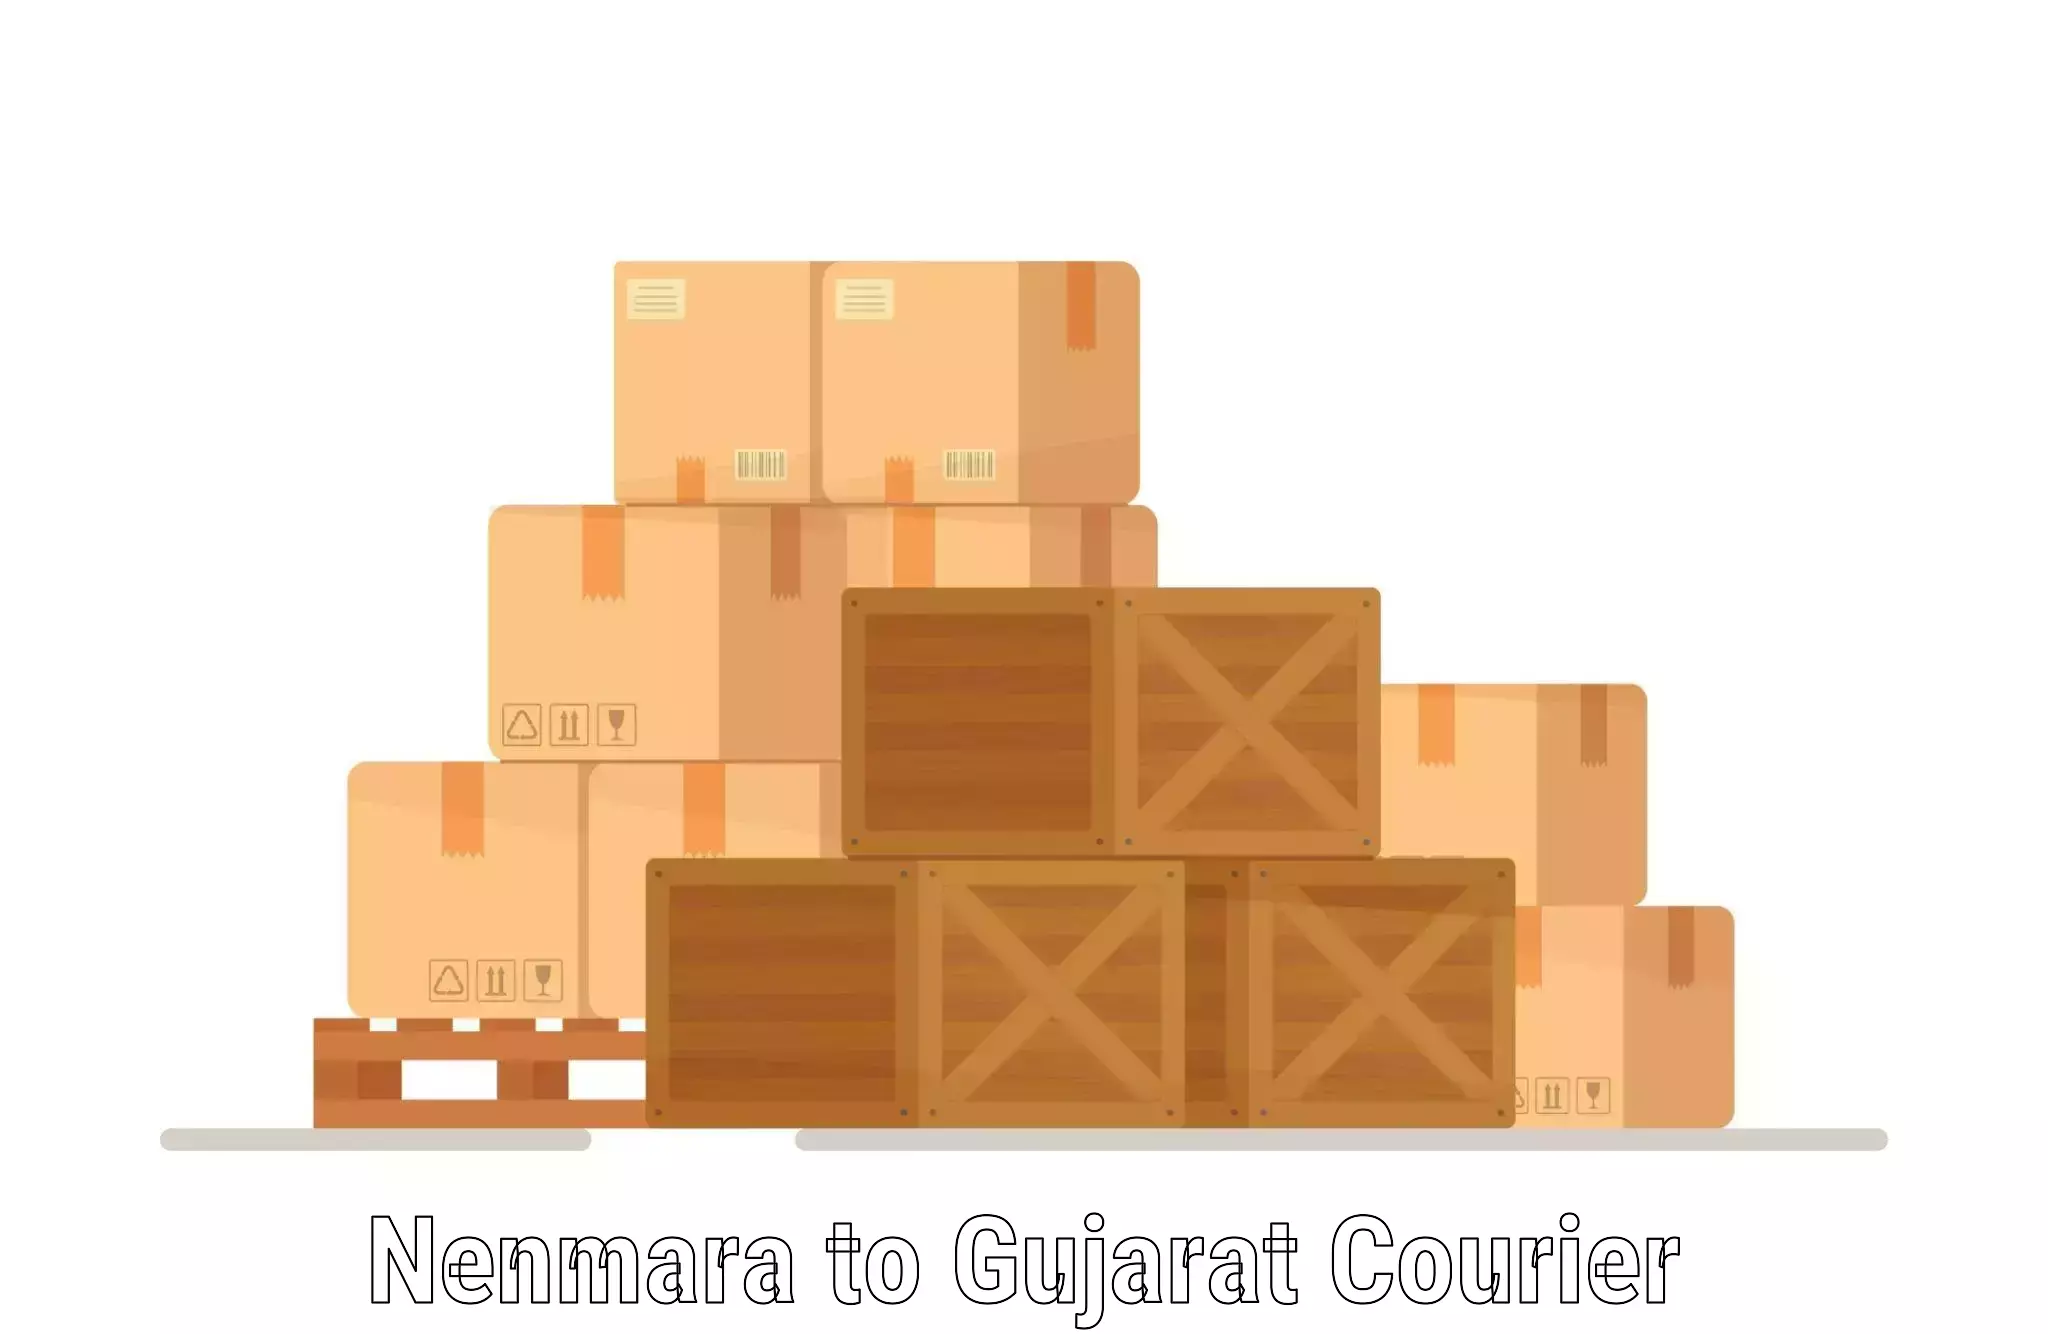 Efficient order fulfillment Nenmara to Gujarat